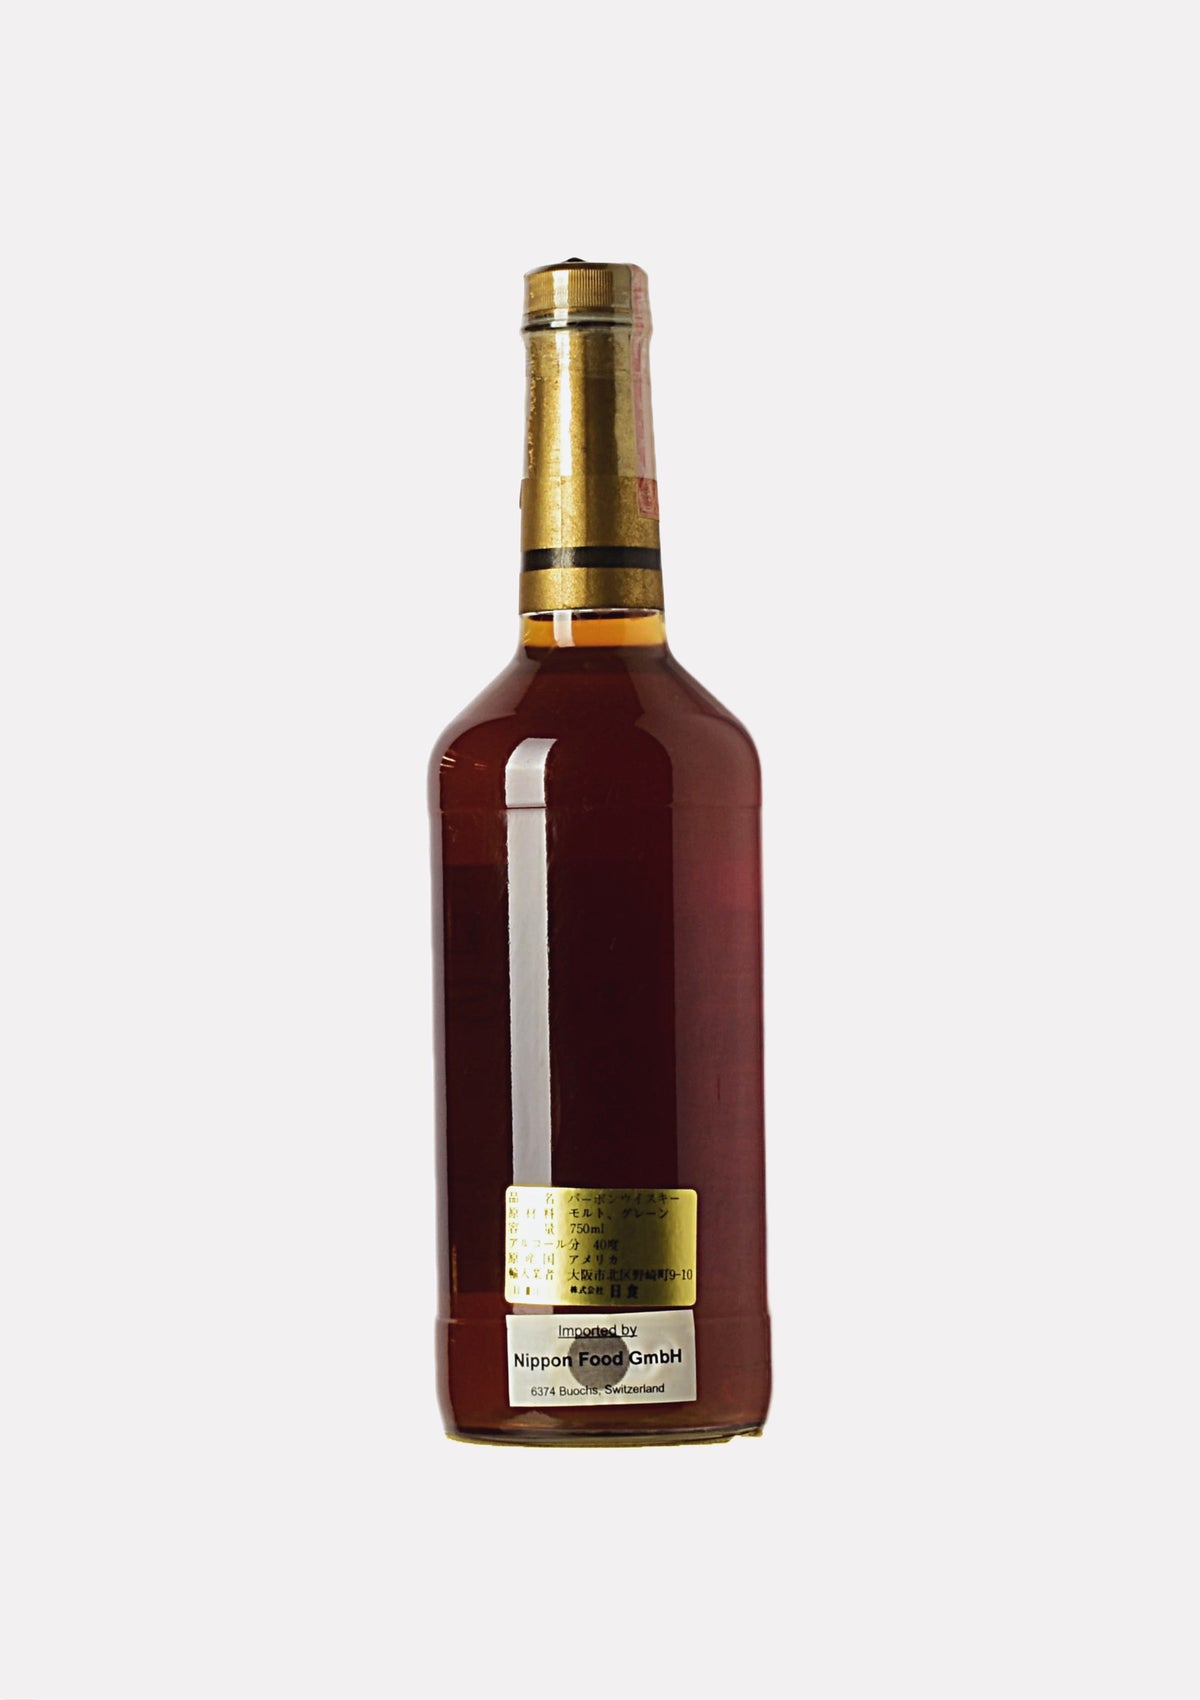 Orchard Springs Kentucky Straight Bourbon Whiskey